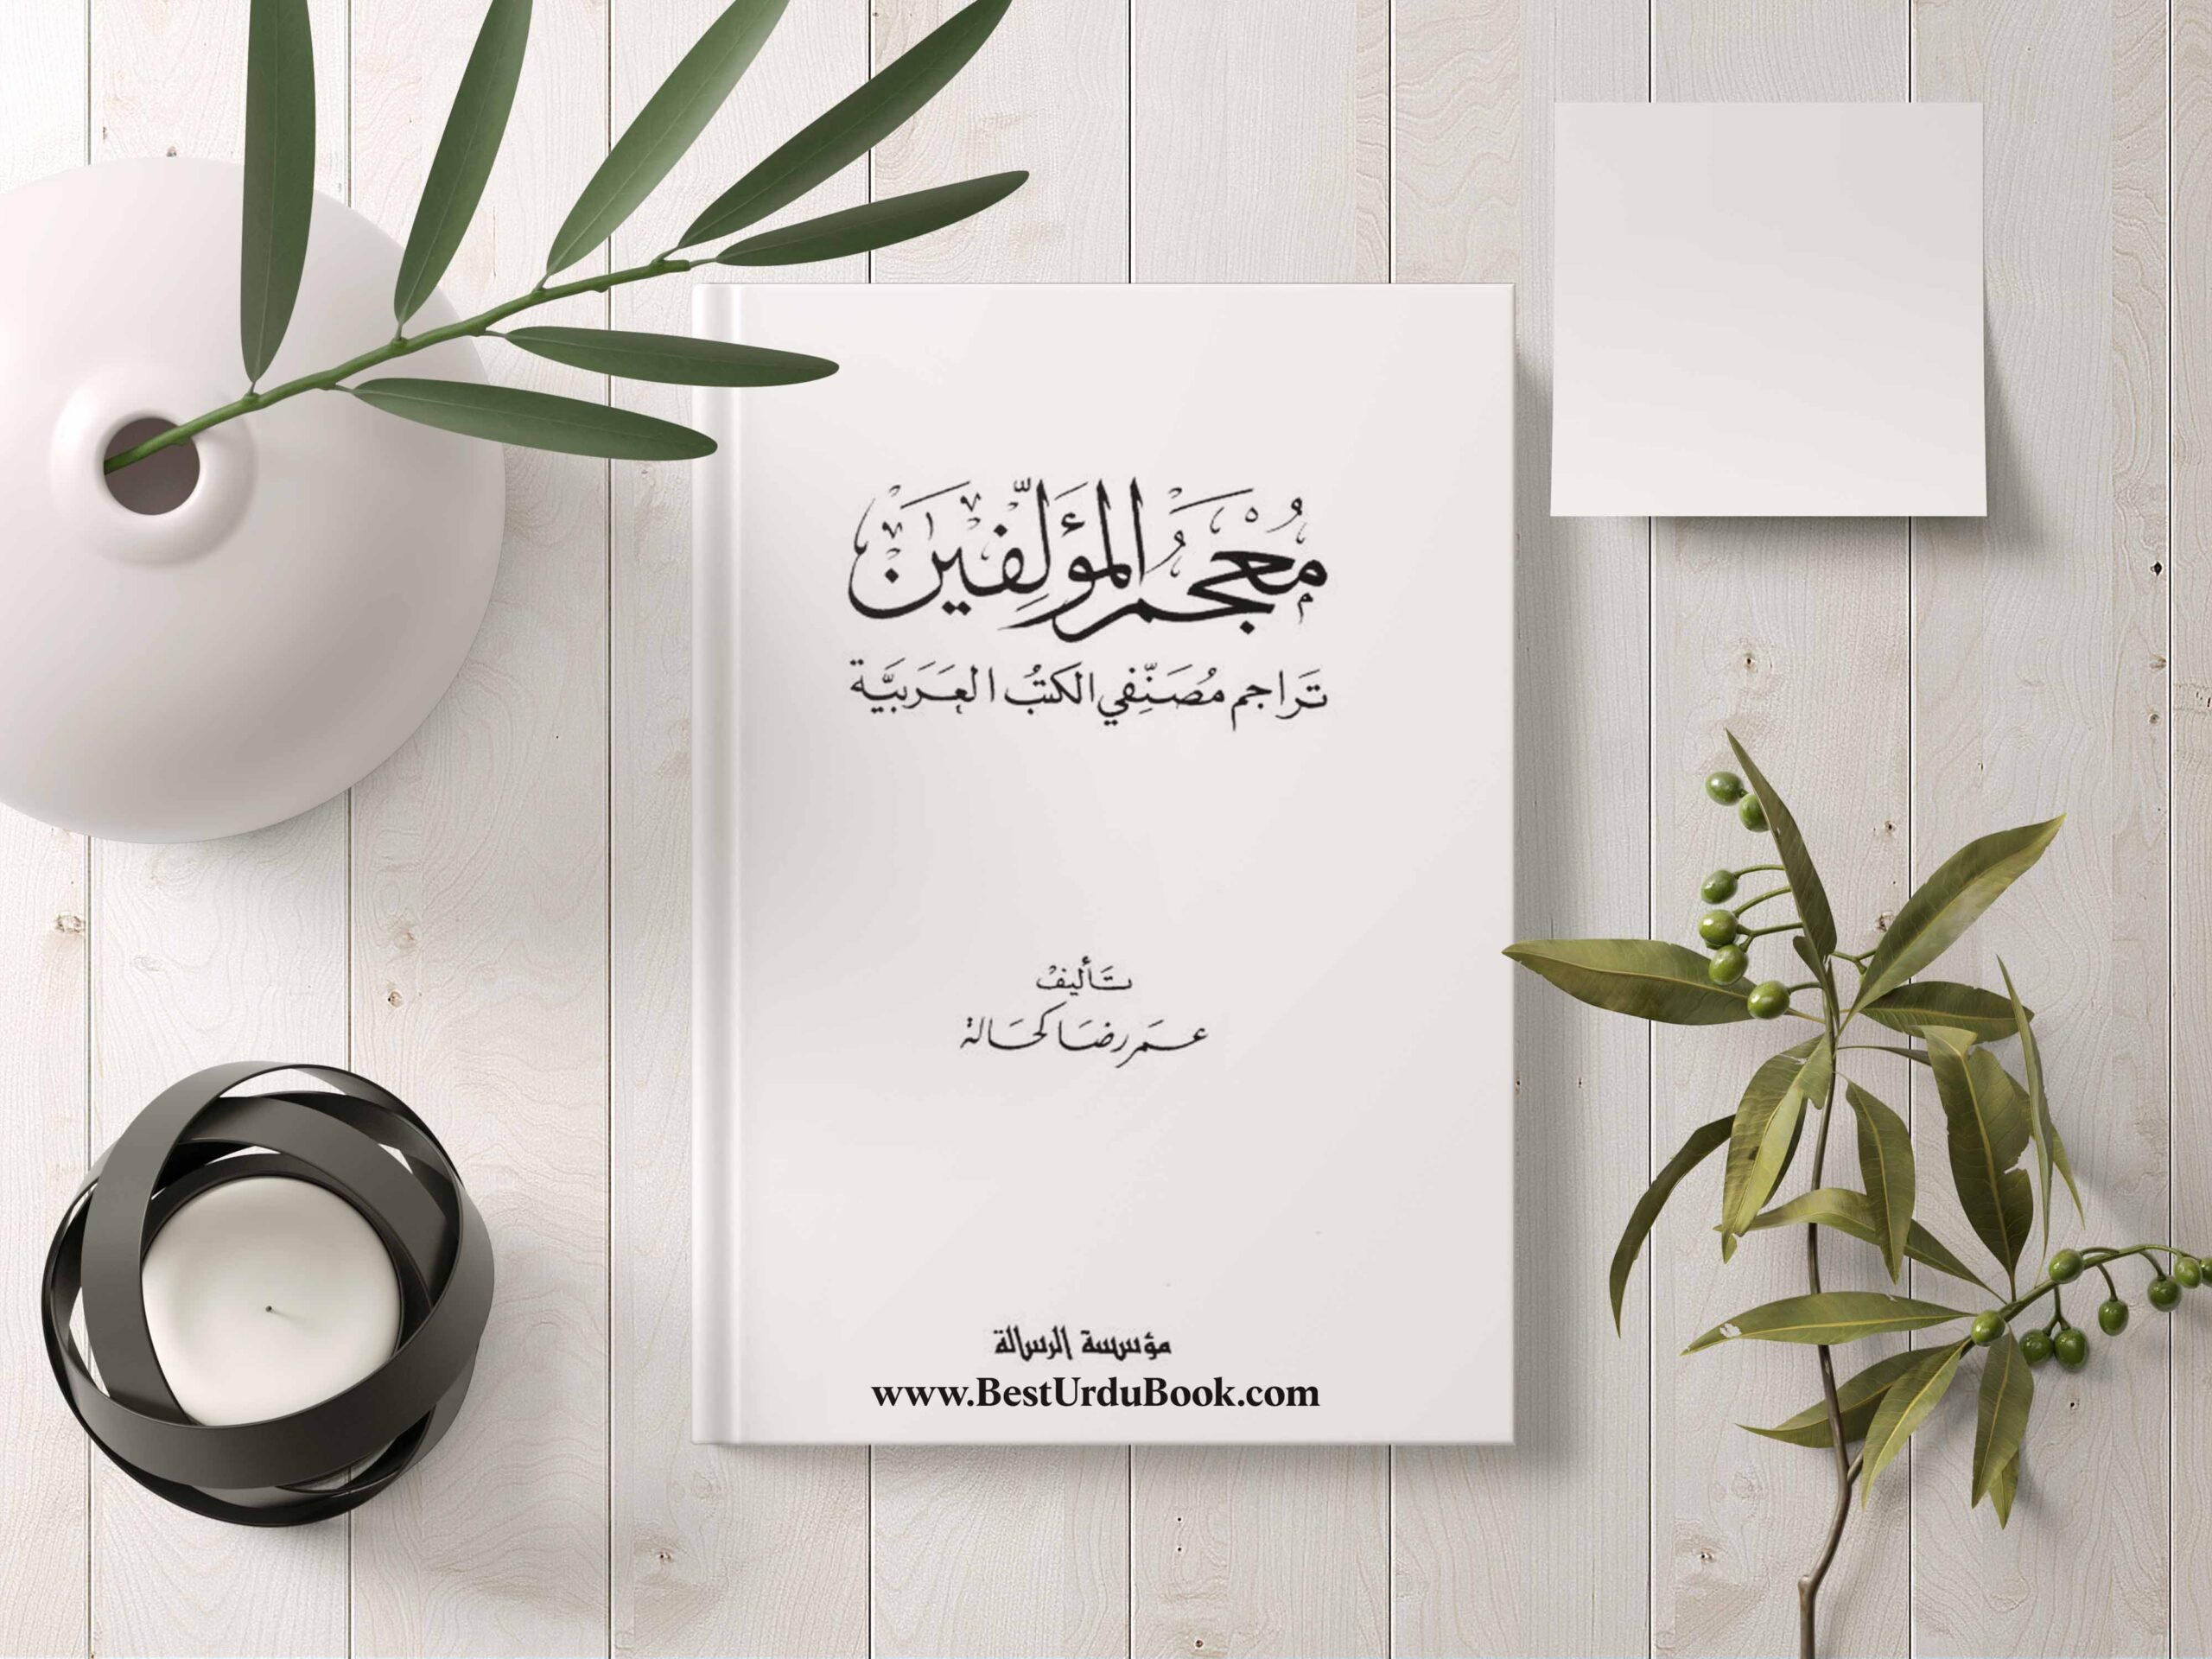 Mujam Ul Mualifeen Book Download In Urdu & pdf format